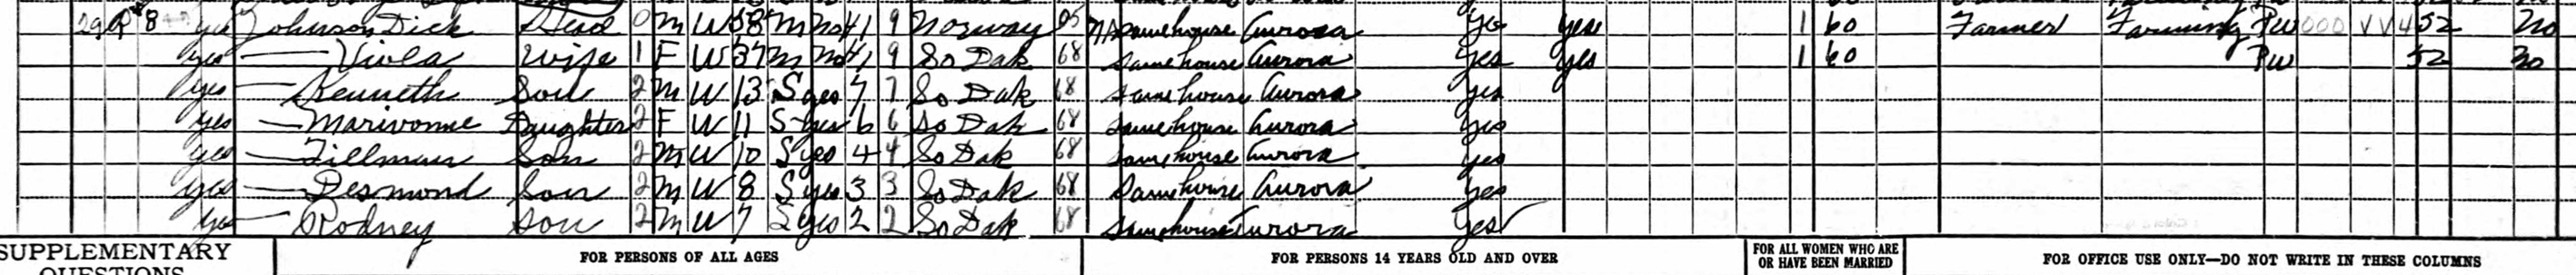 Census_South-Dakota_Dick_Johnson_1940-